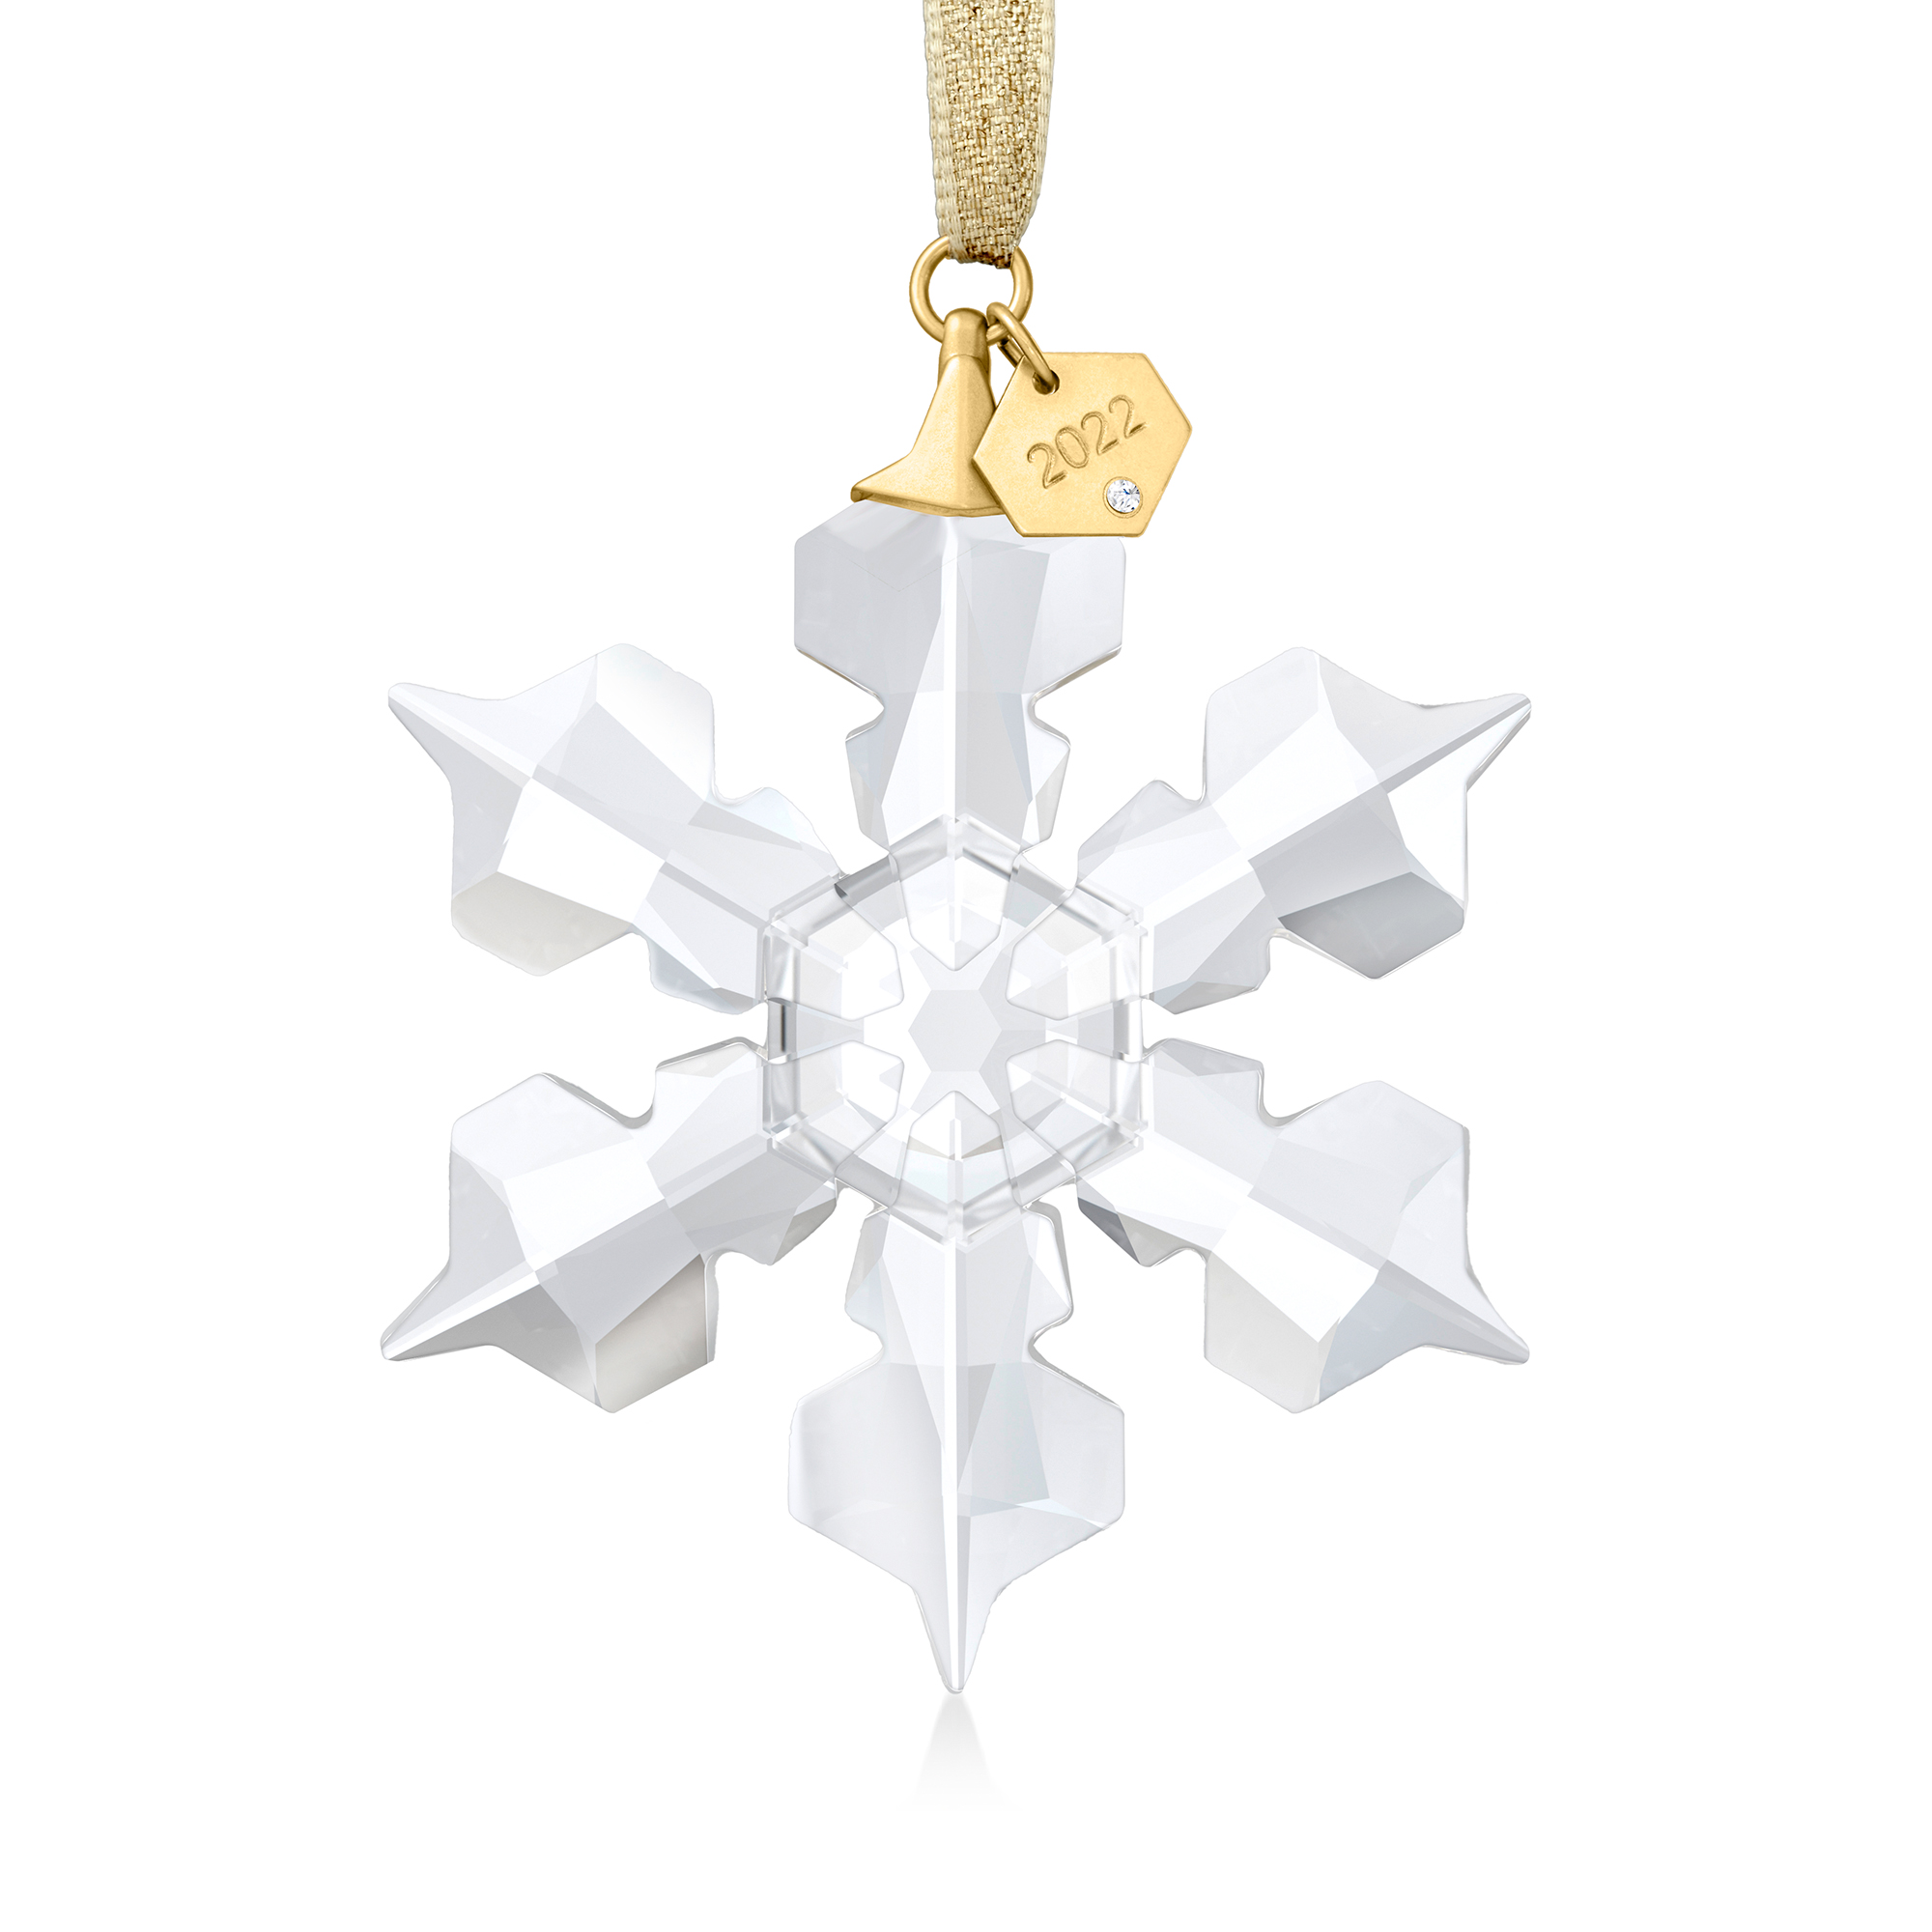 Swarovski Crystal Annual Edition 2022 Ornament | Ross-Simons